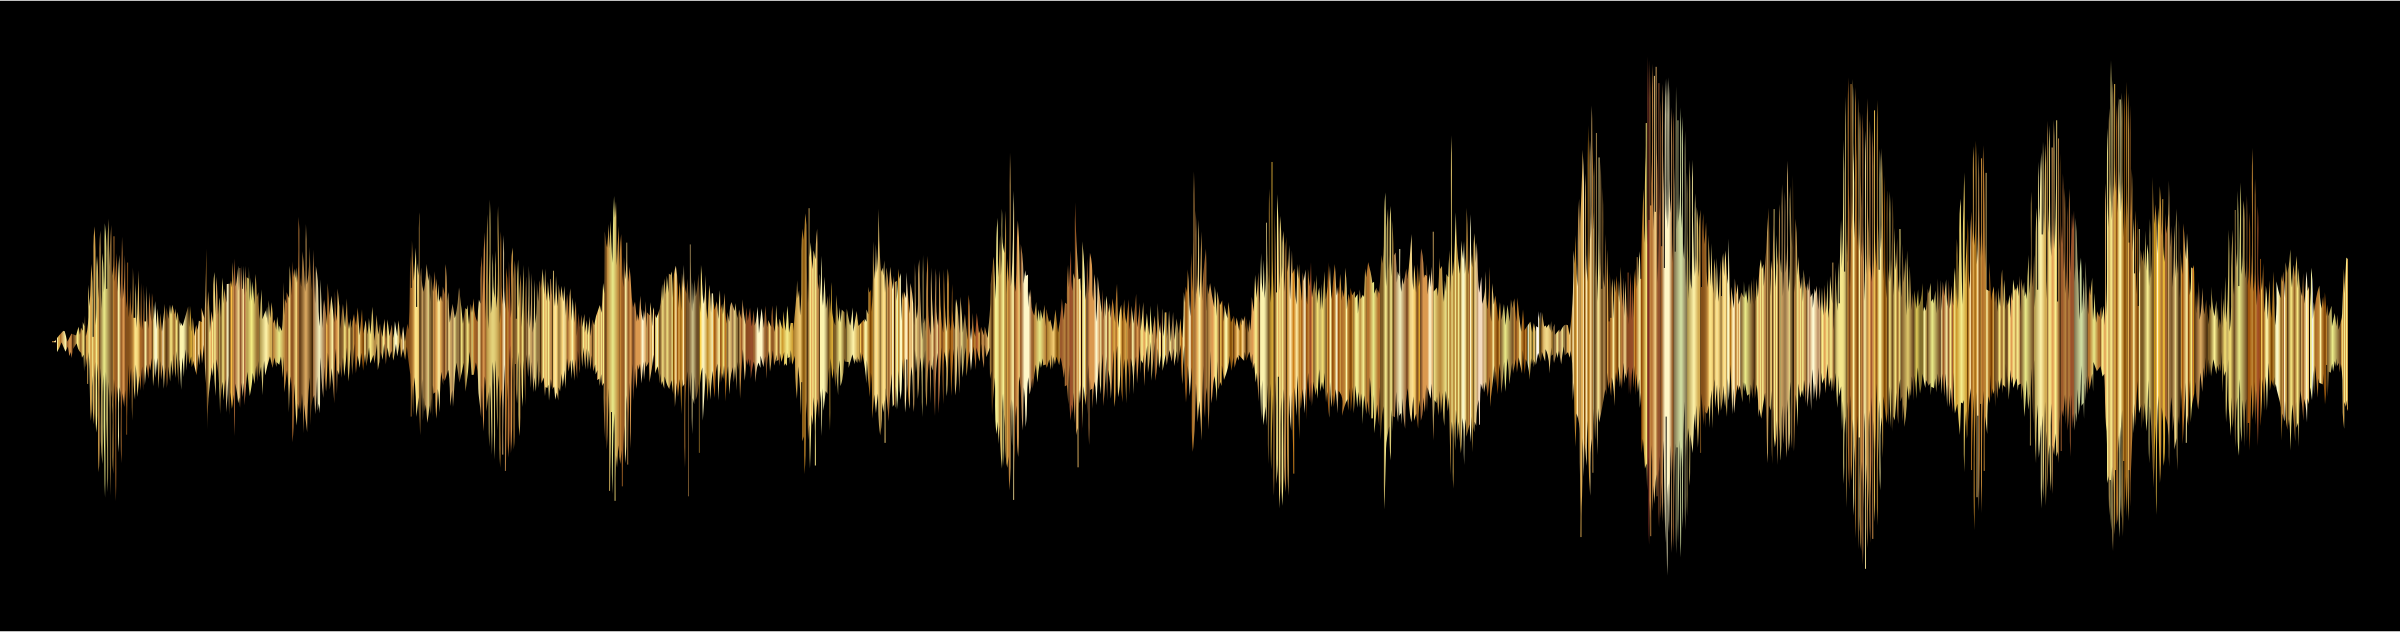 Gold Sound Wave SVG Clip arts